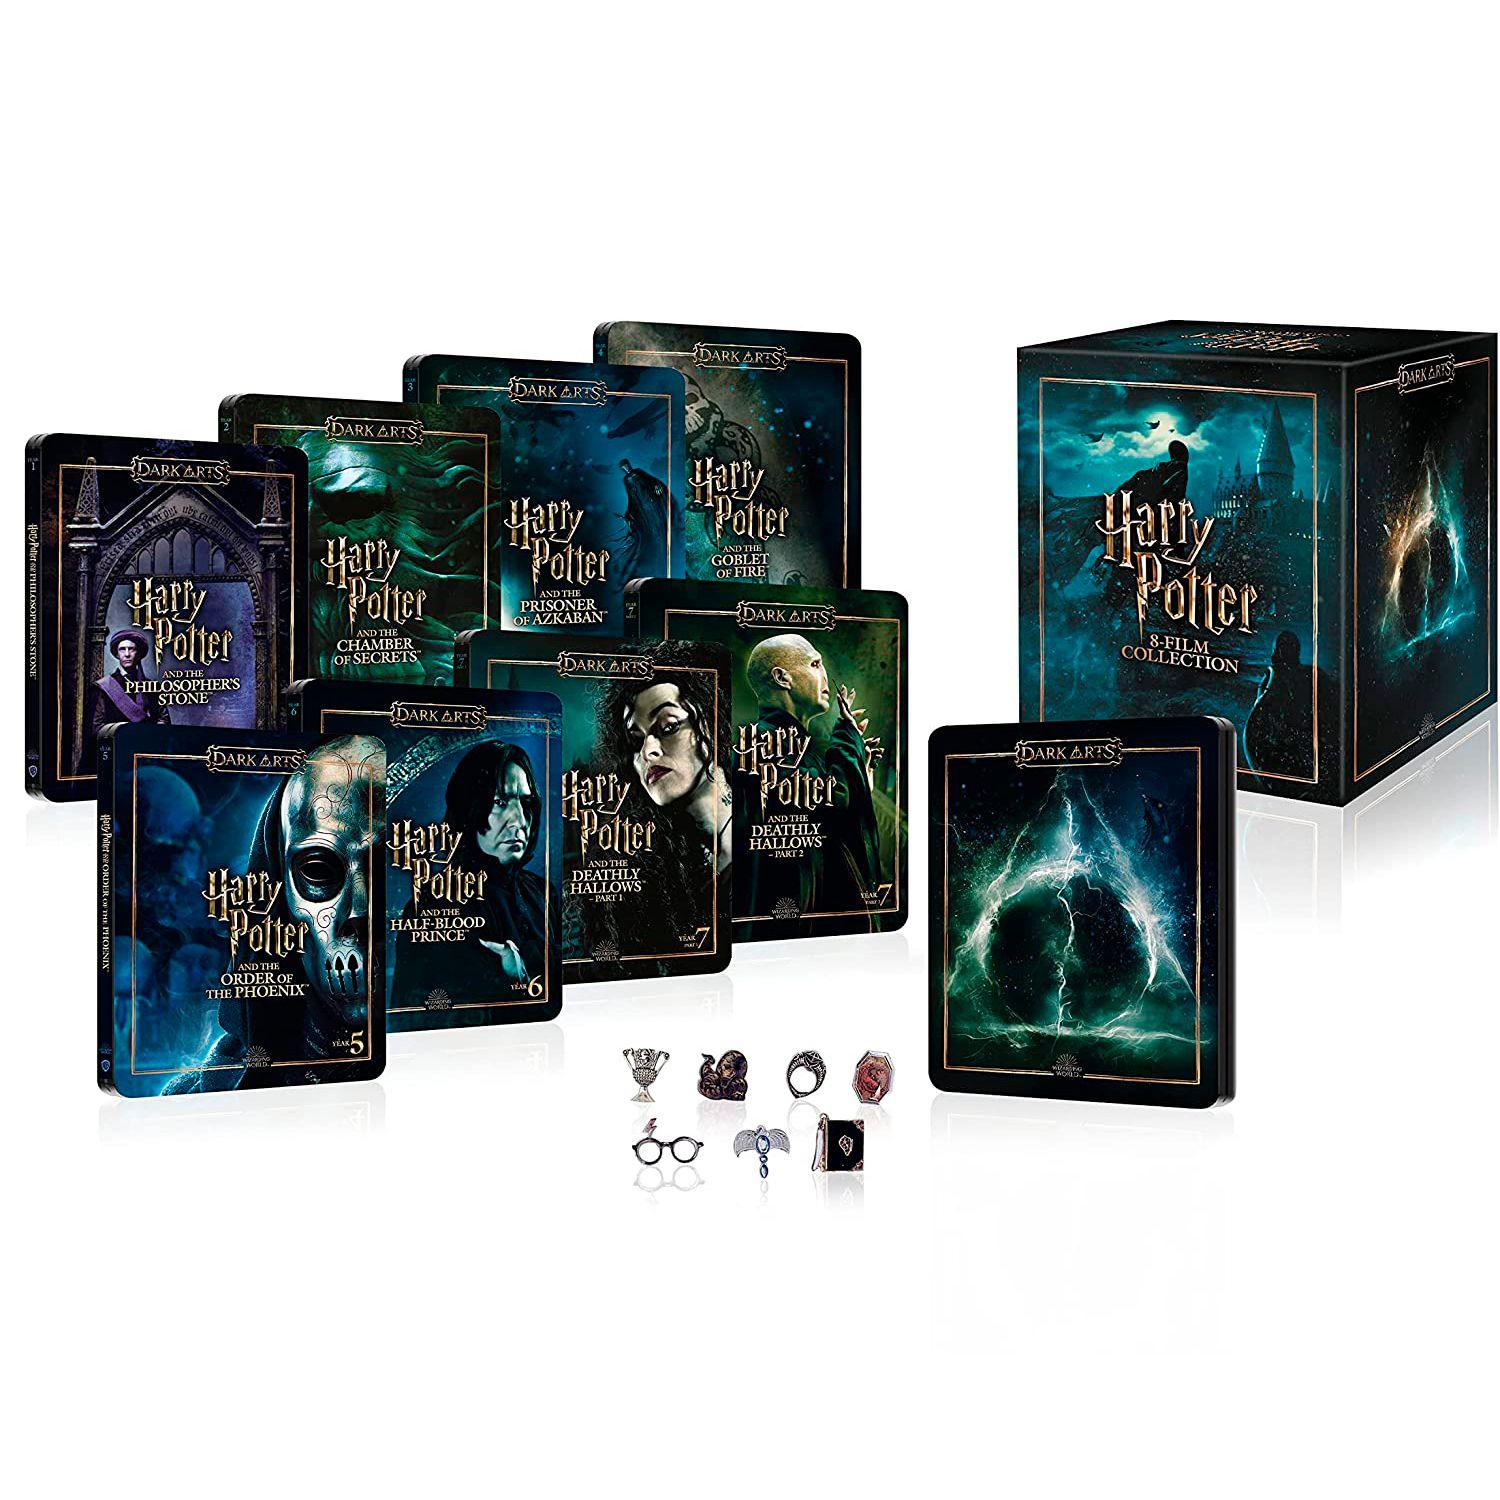 Гарри Поттер: Полная Коллекция (англ. яз.) (4K UHD Blu-ray) Steelbook